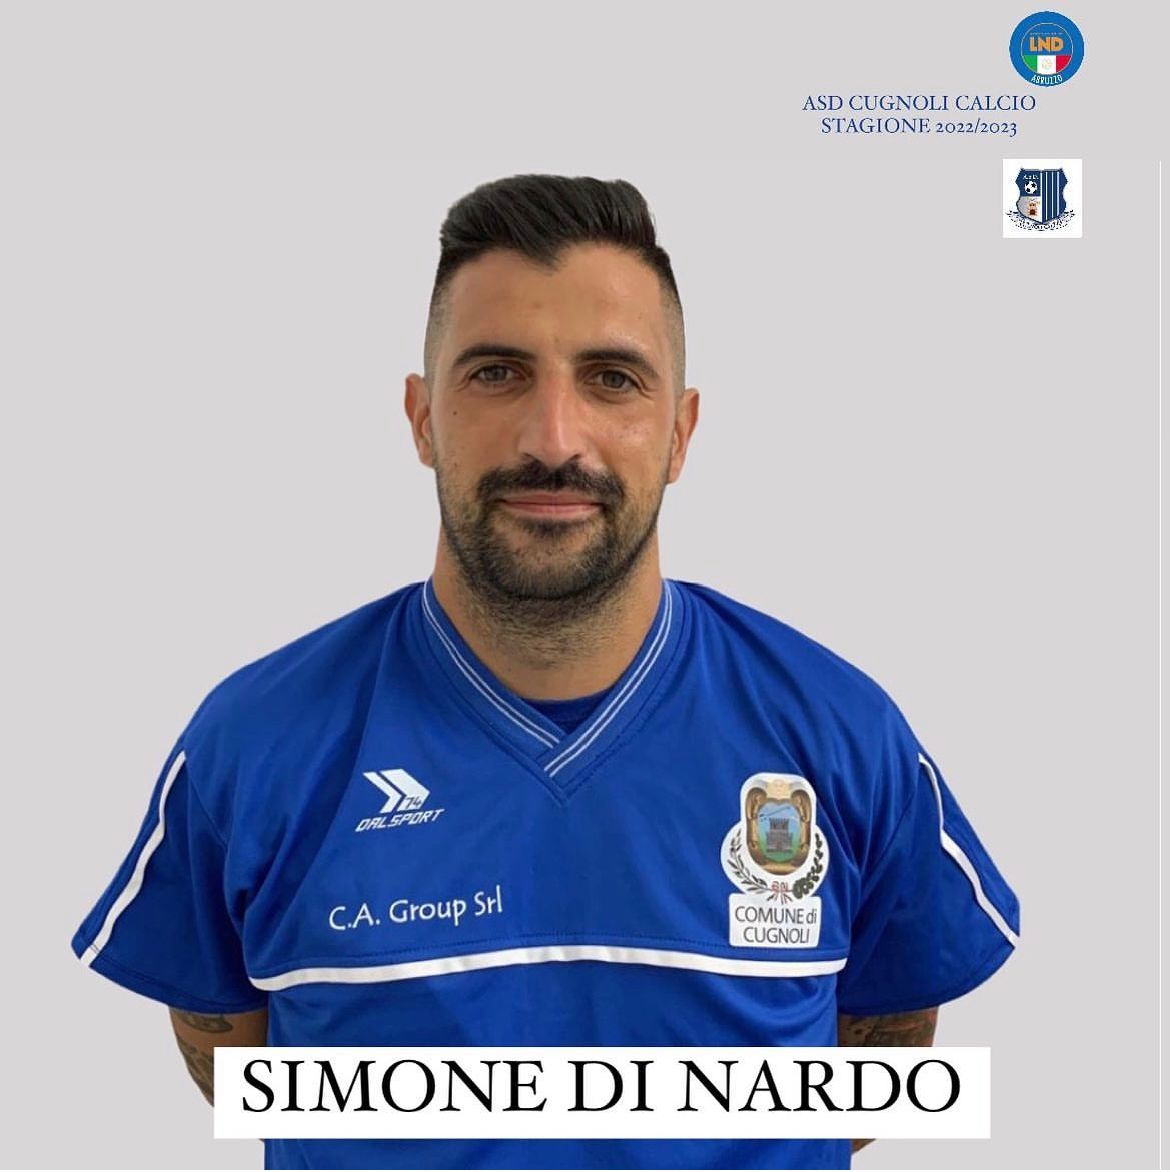 Simone Di Nardo